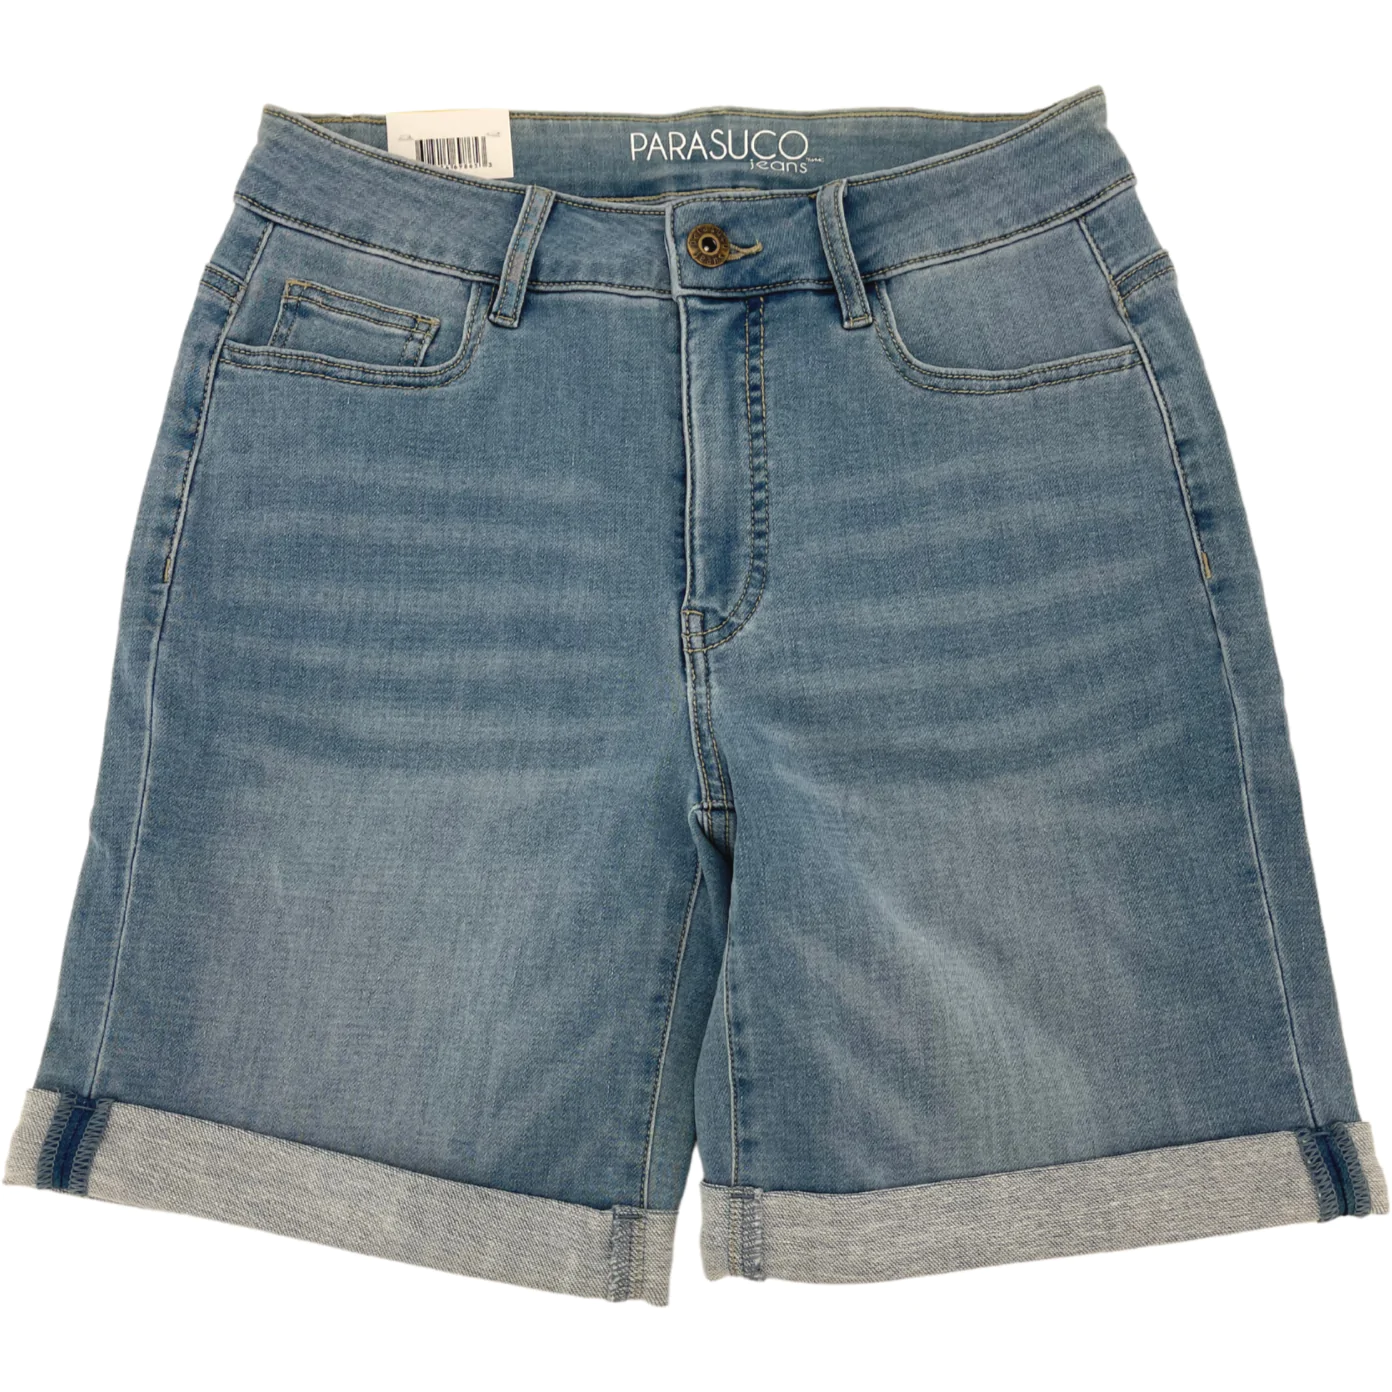 Parasuco Women's Jean Shorts: Light Wash / Size 6